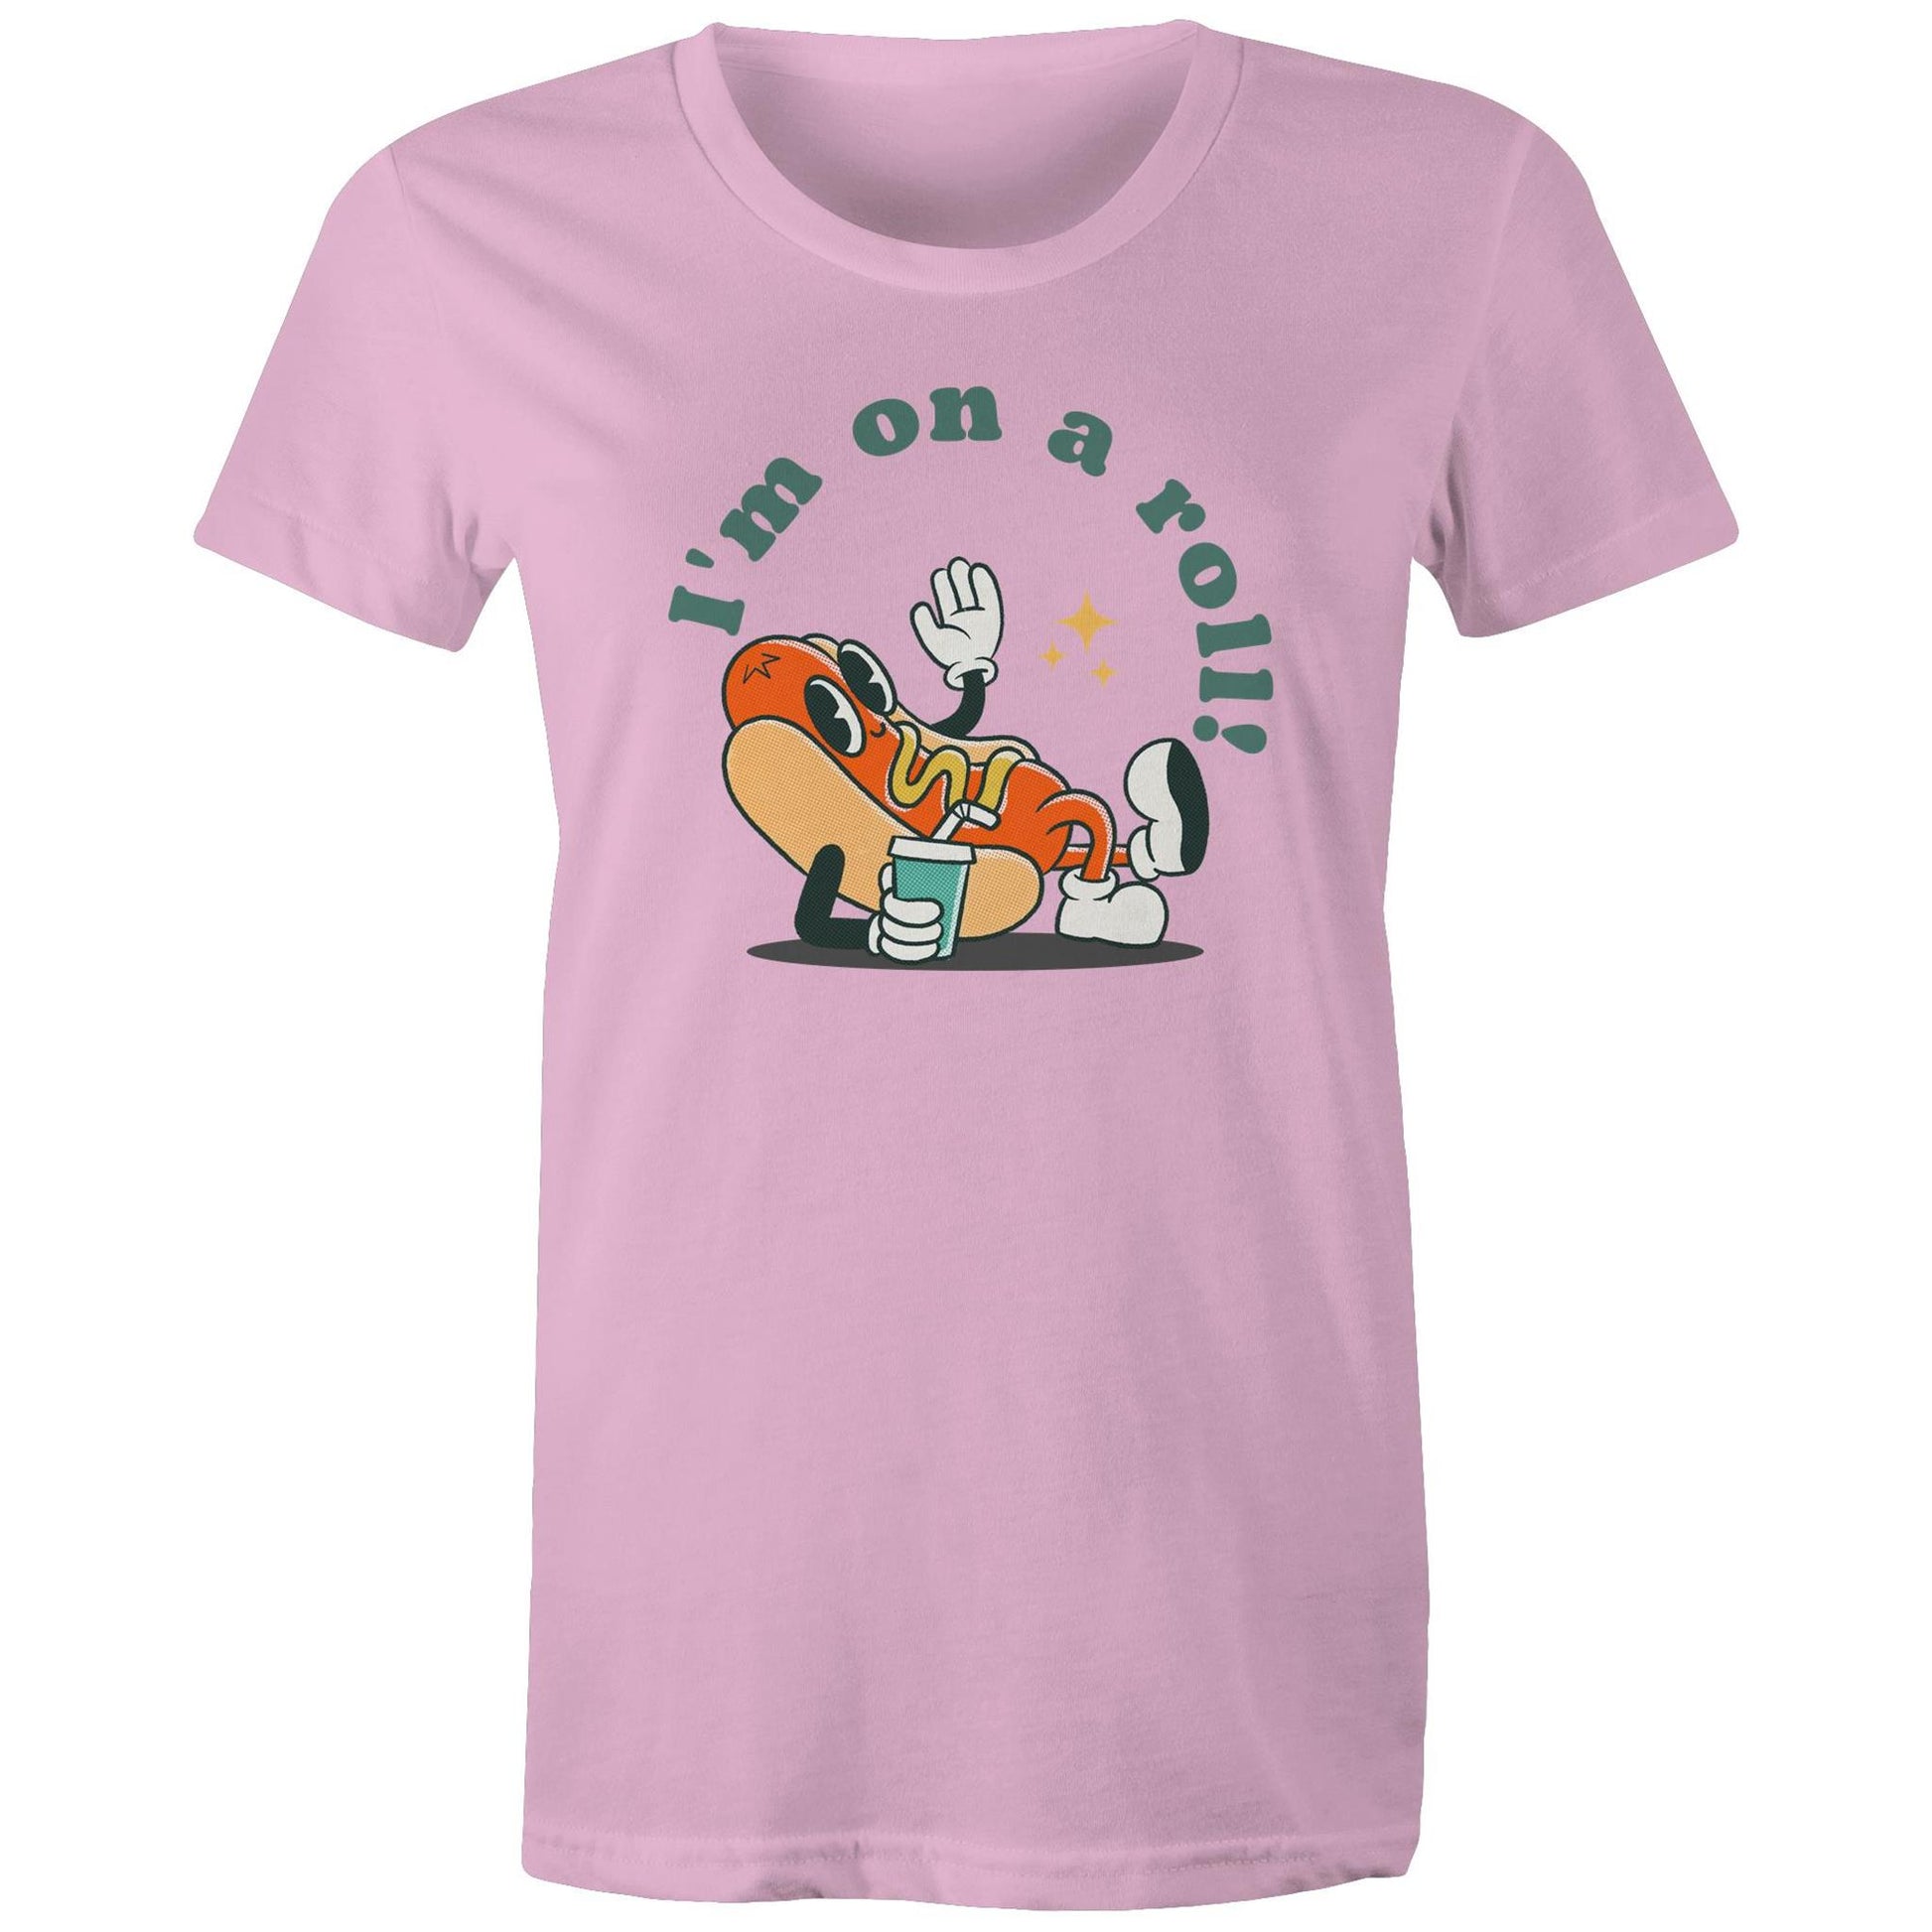 Hot Dog, I'm On A Roll - Womens T-shirt Pink Womens T-shirt Food